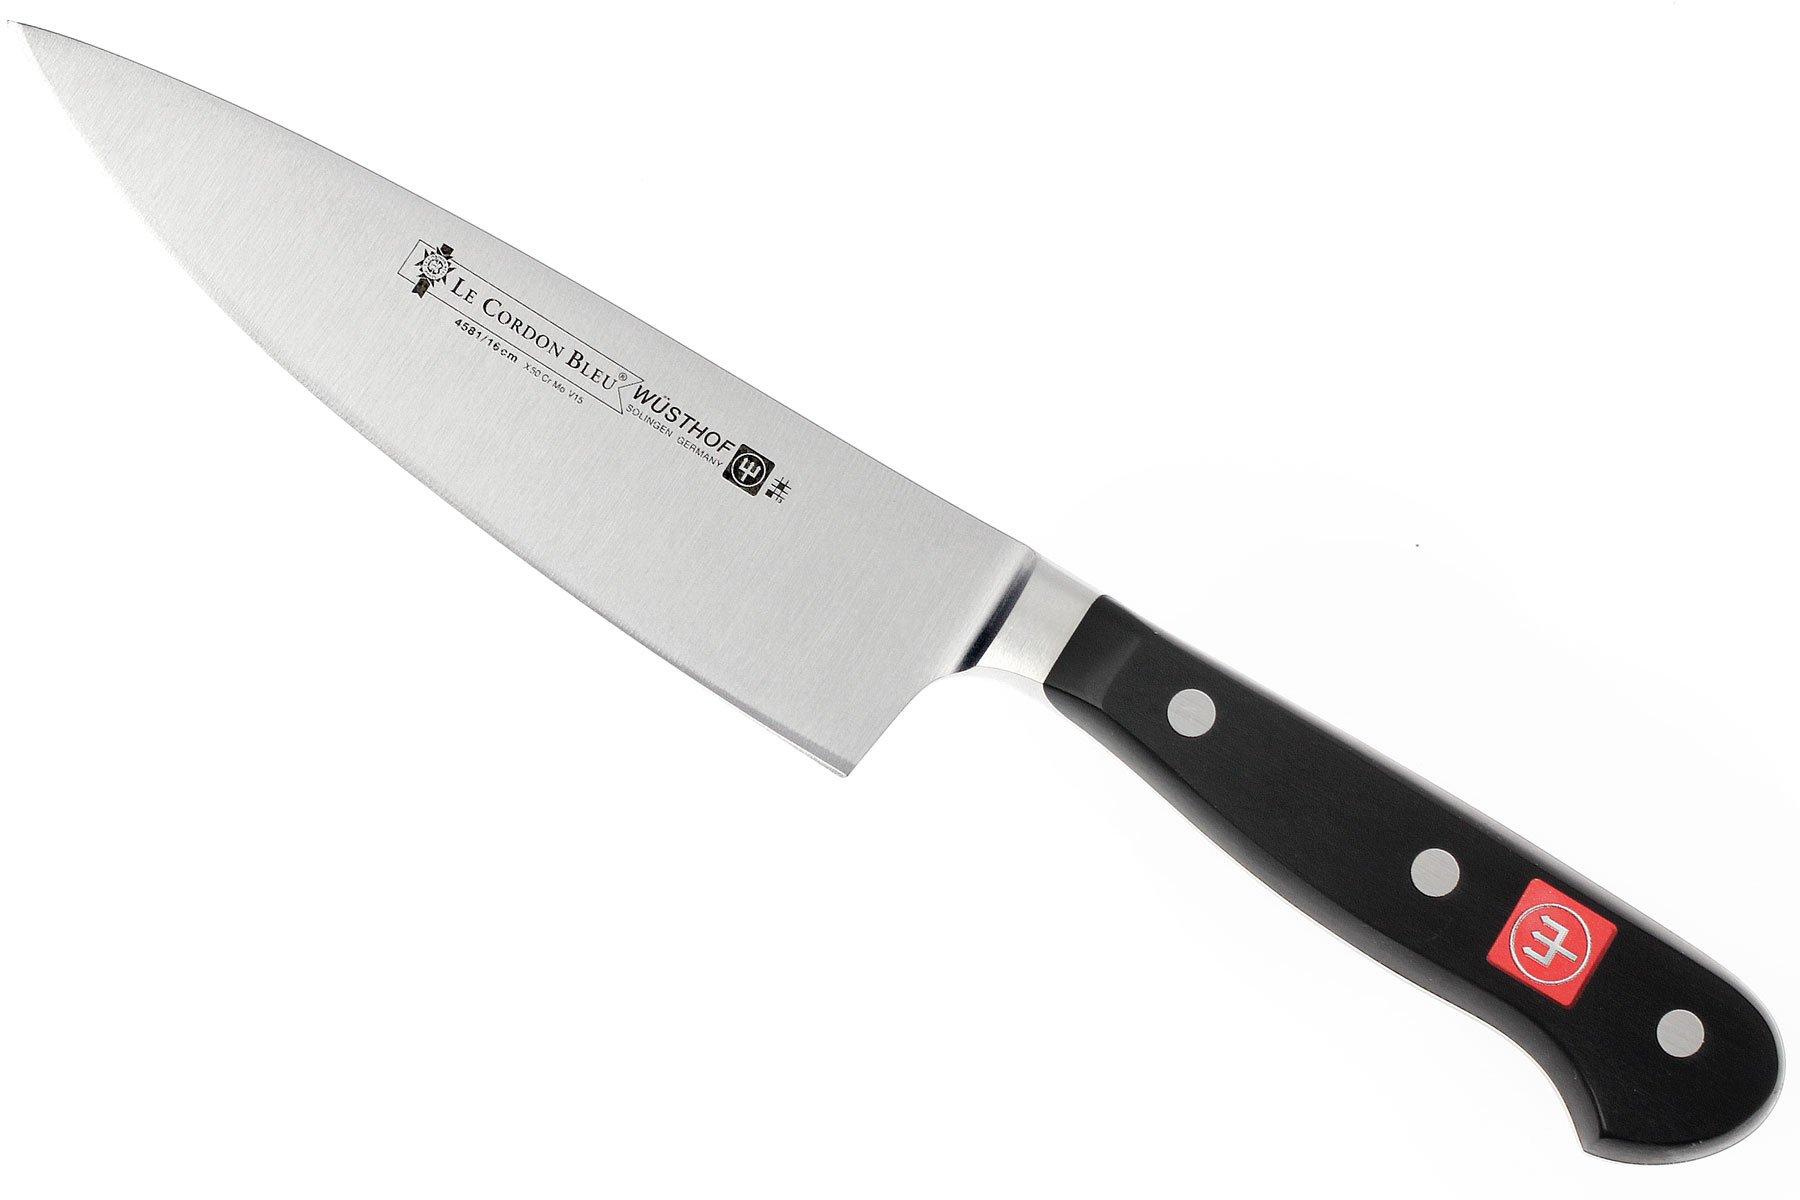 Wusthof Cordon Bleu Chef's knife, 16cm / 6